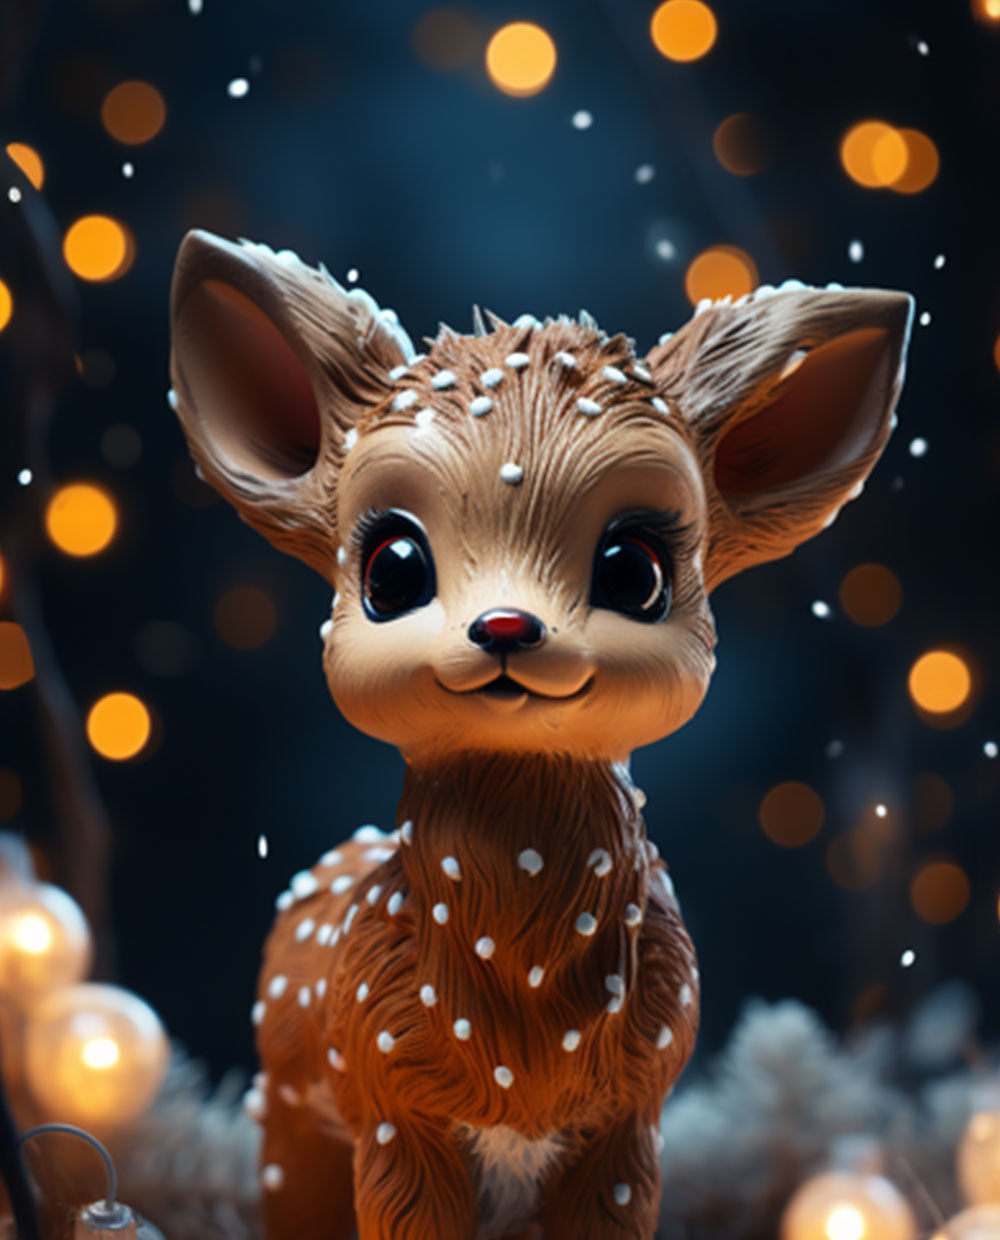 Baby Rudolph